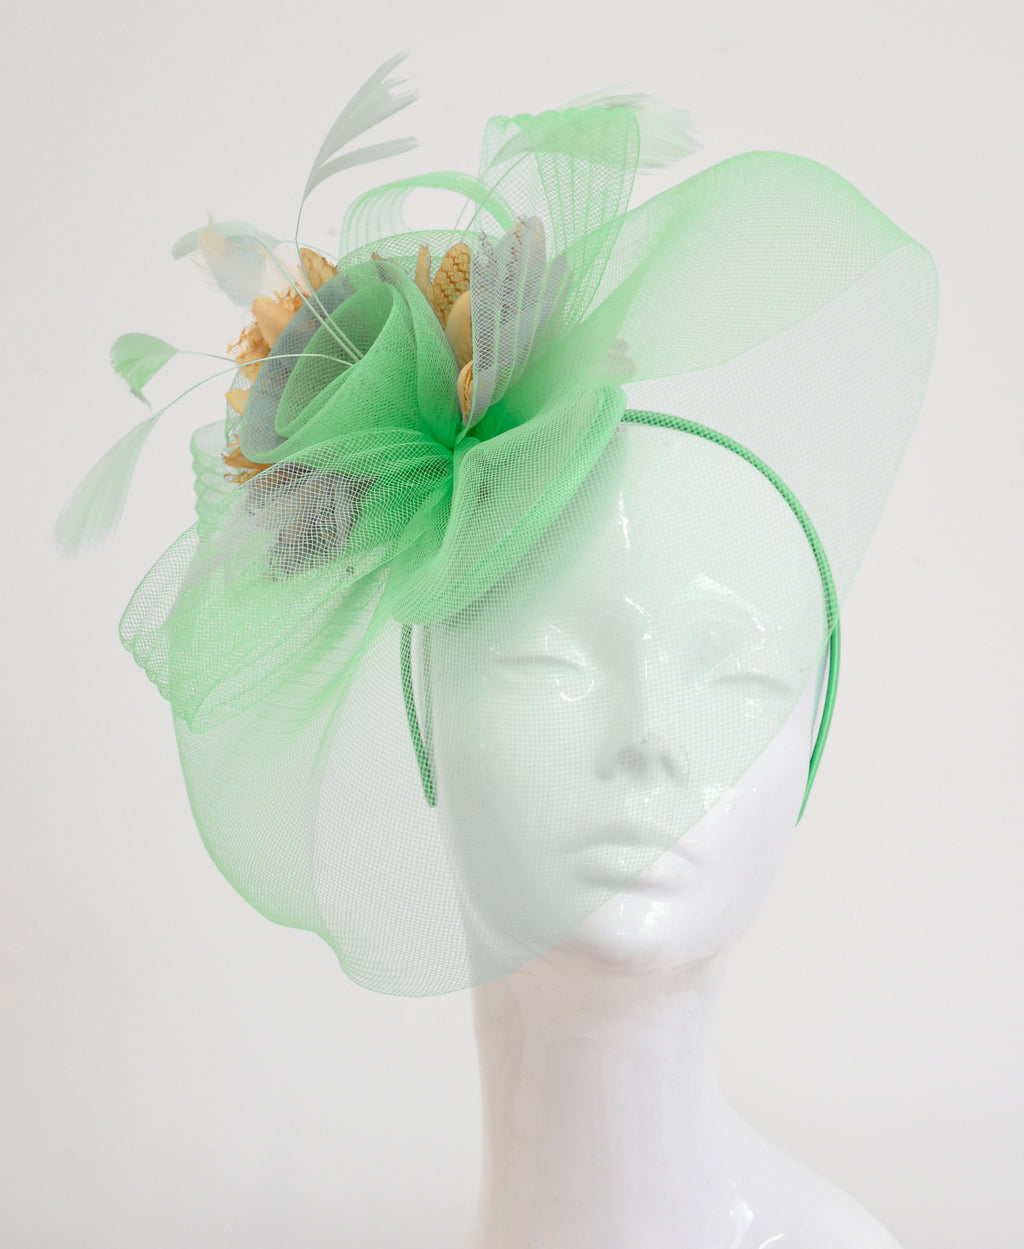 Caprilite Big Mint Green and Beige Fascinator Hat Veil Net Ascot Derby Races Wedding Headband Feather